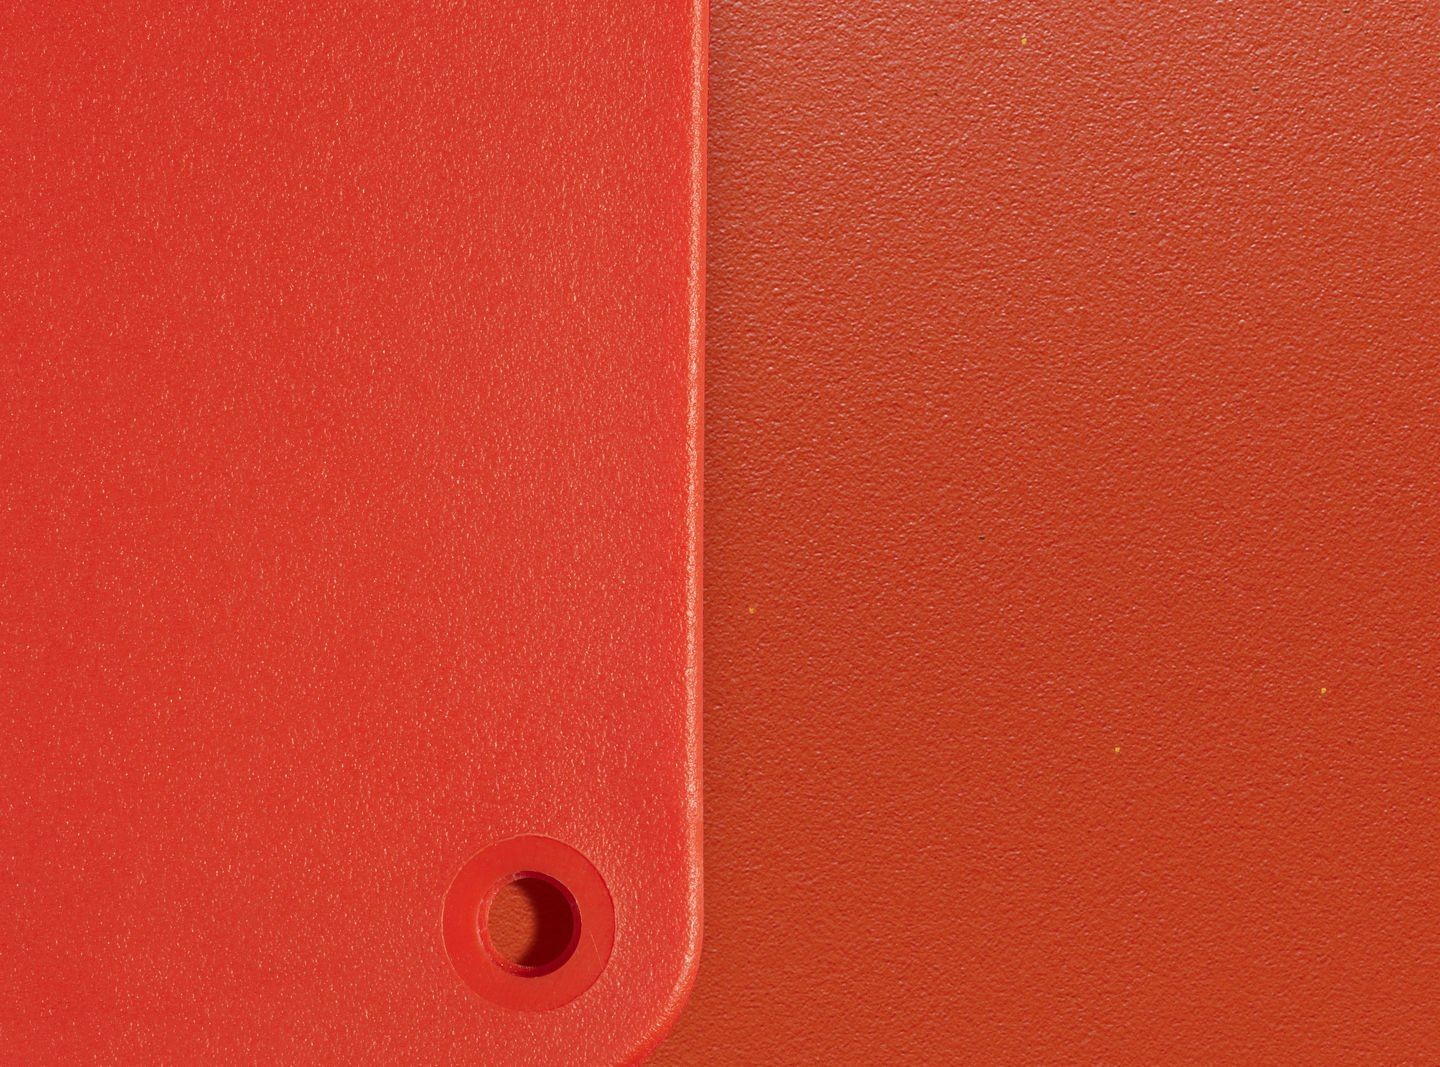 Vitra PACC Eames Plastic Armchair - 03 poppy red (links) vs. 03 poppy red RE (rechts-Neu)--39